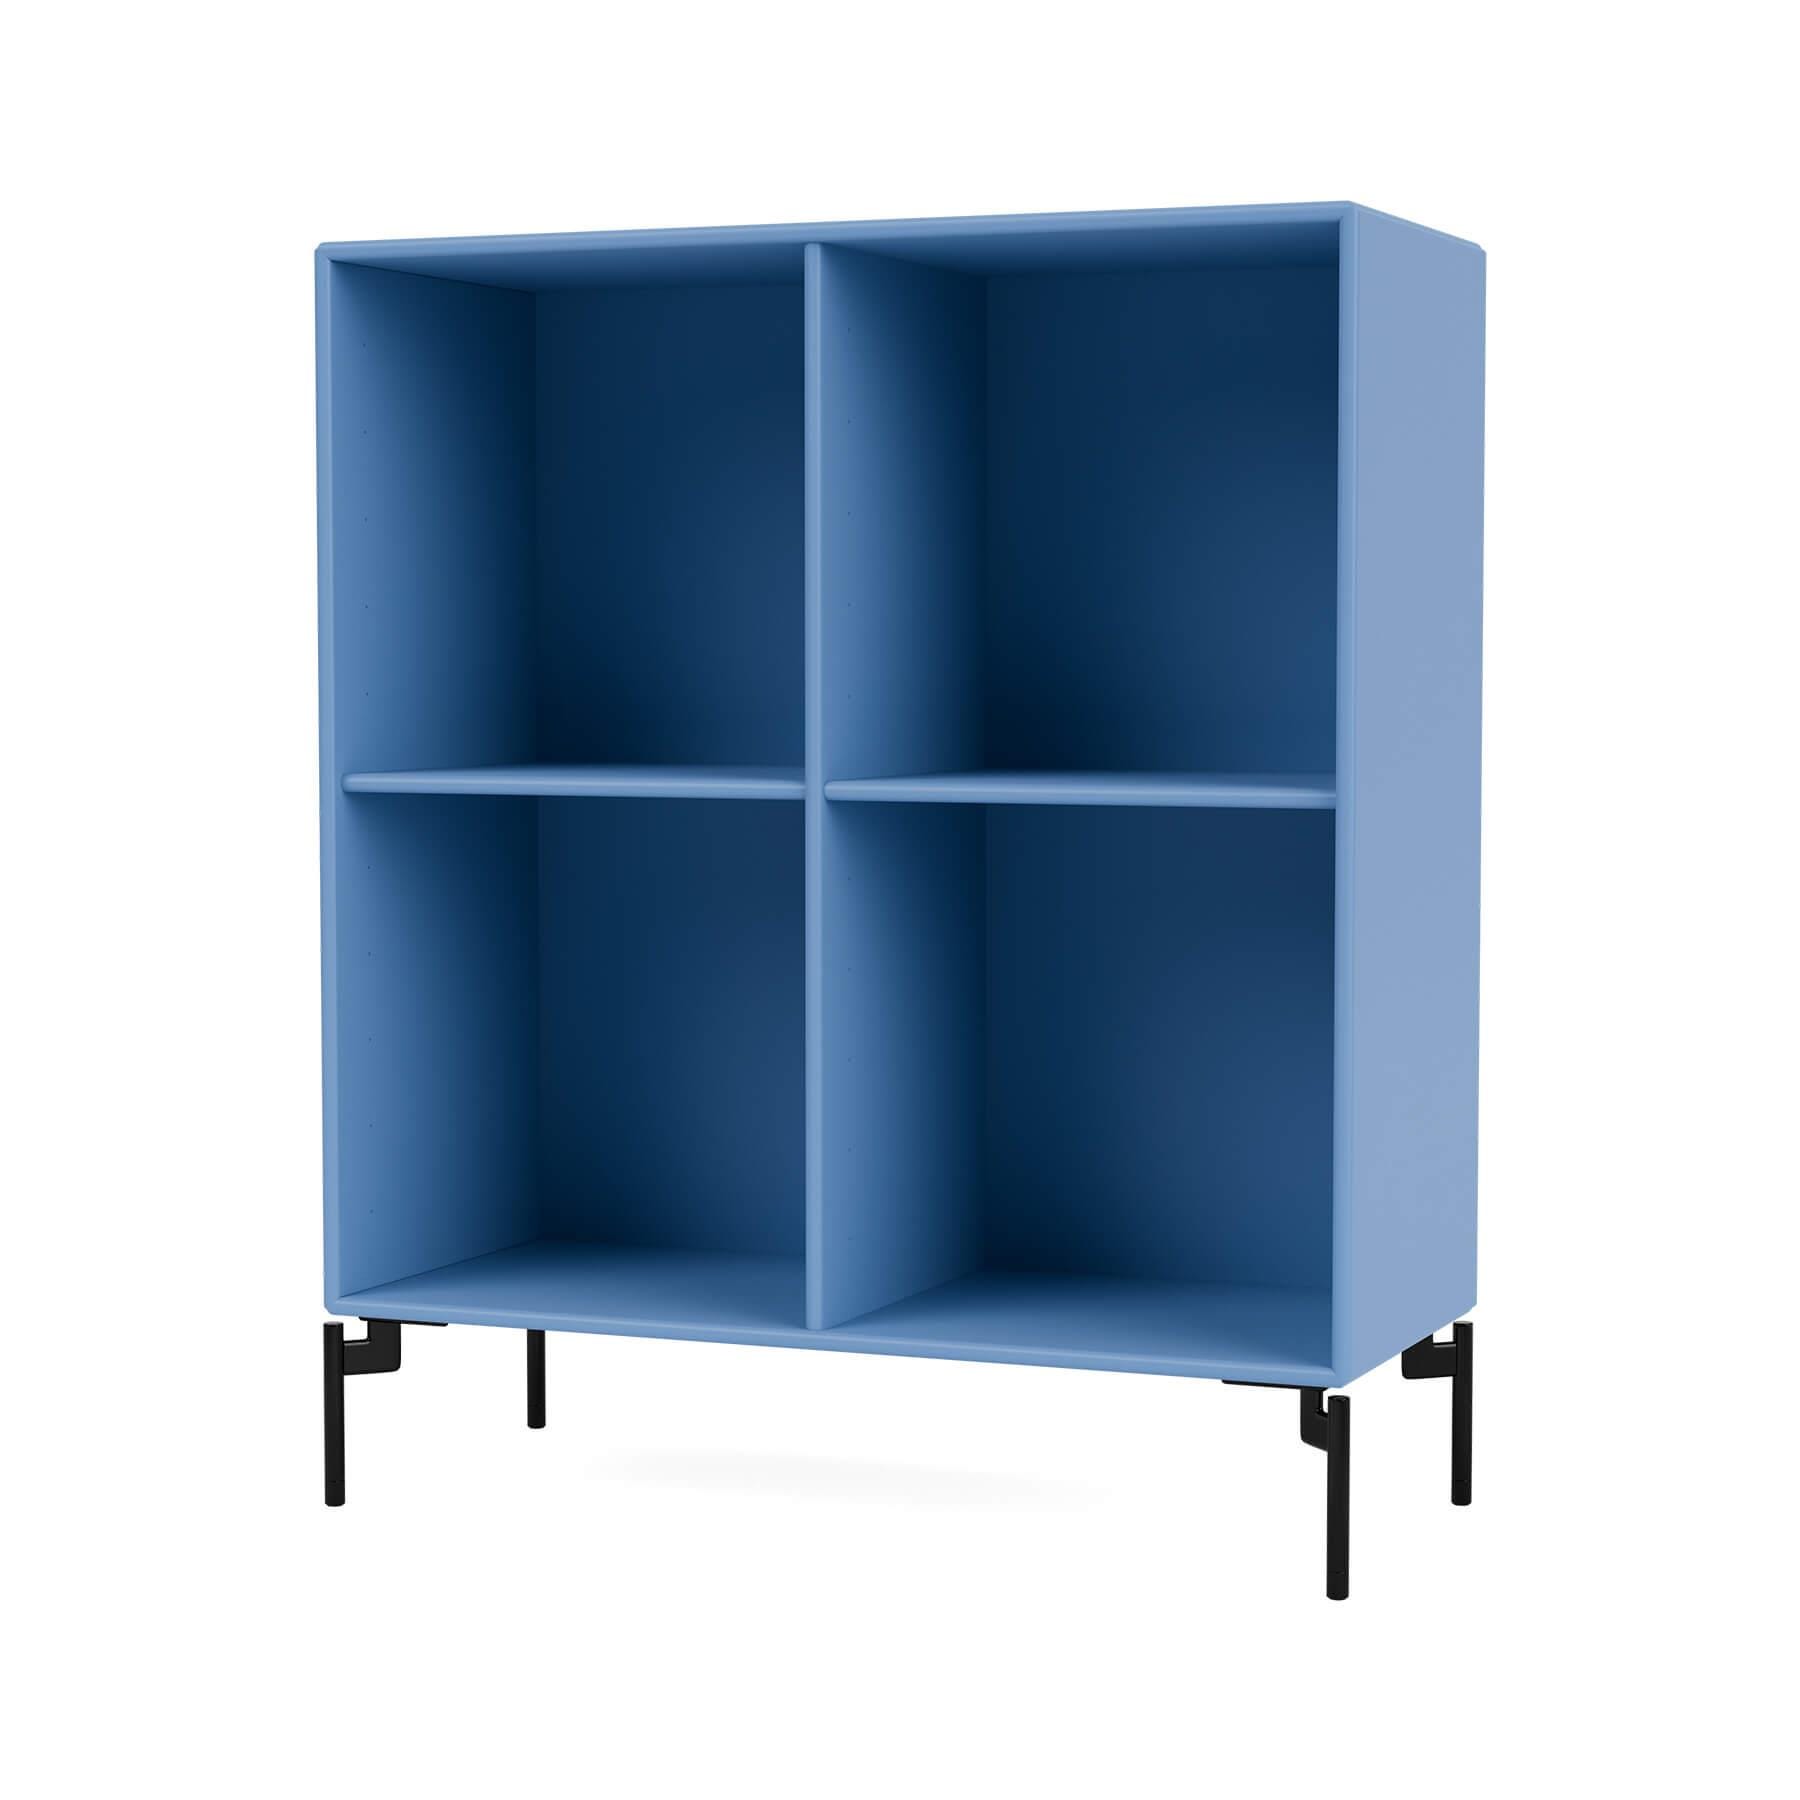 Montana Show Bookcase Azure Black Legs Blue Designer Furniture From Holloways Of Ludlow